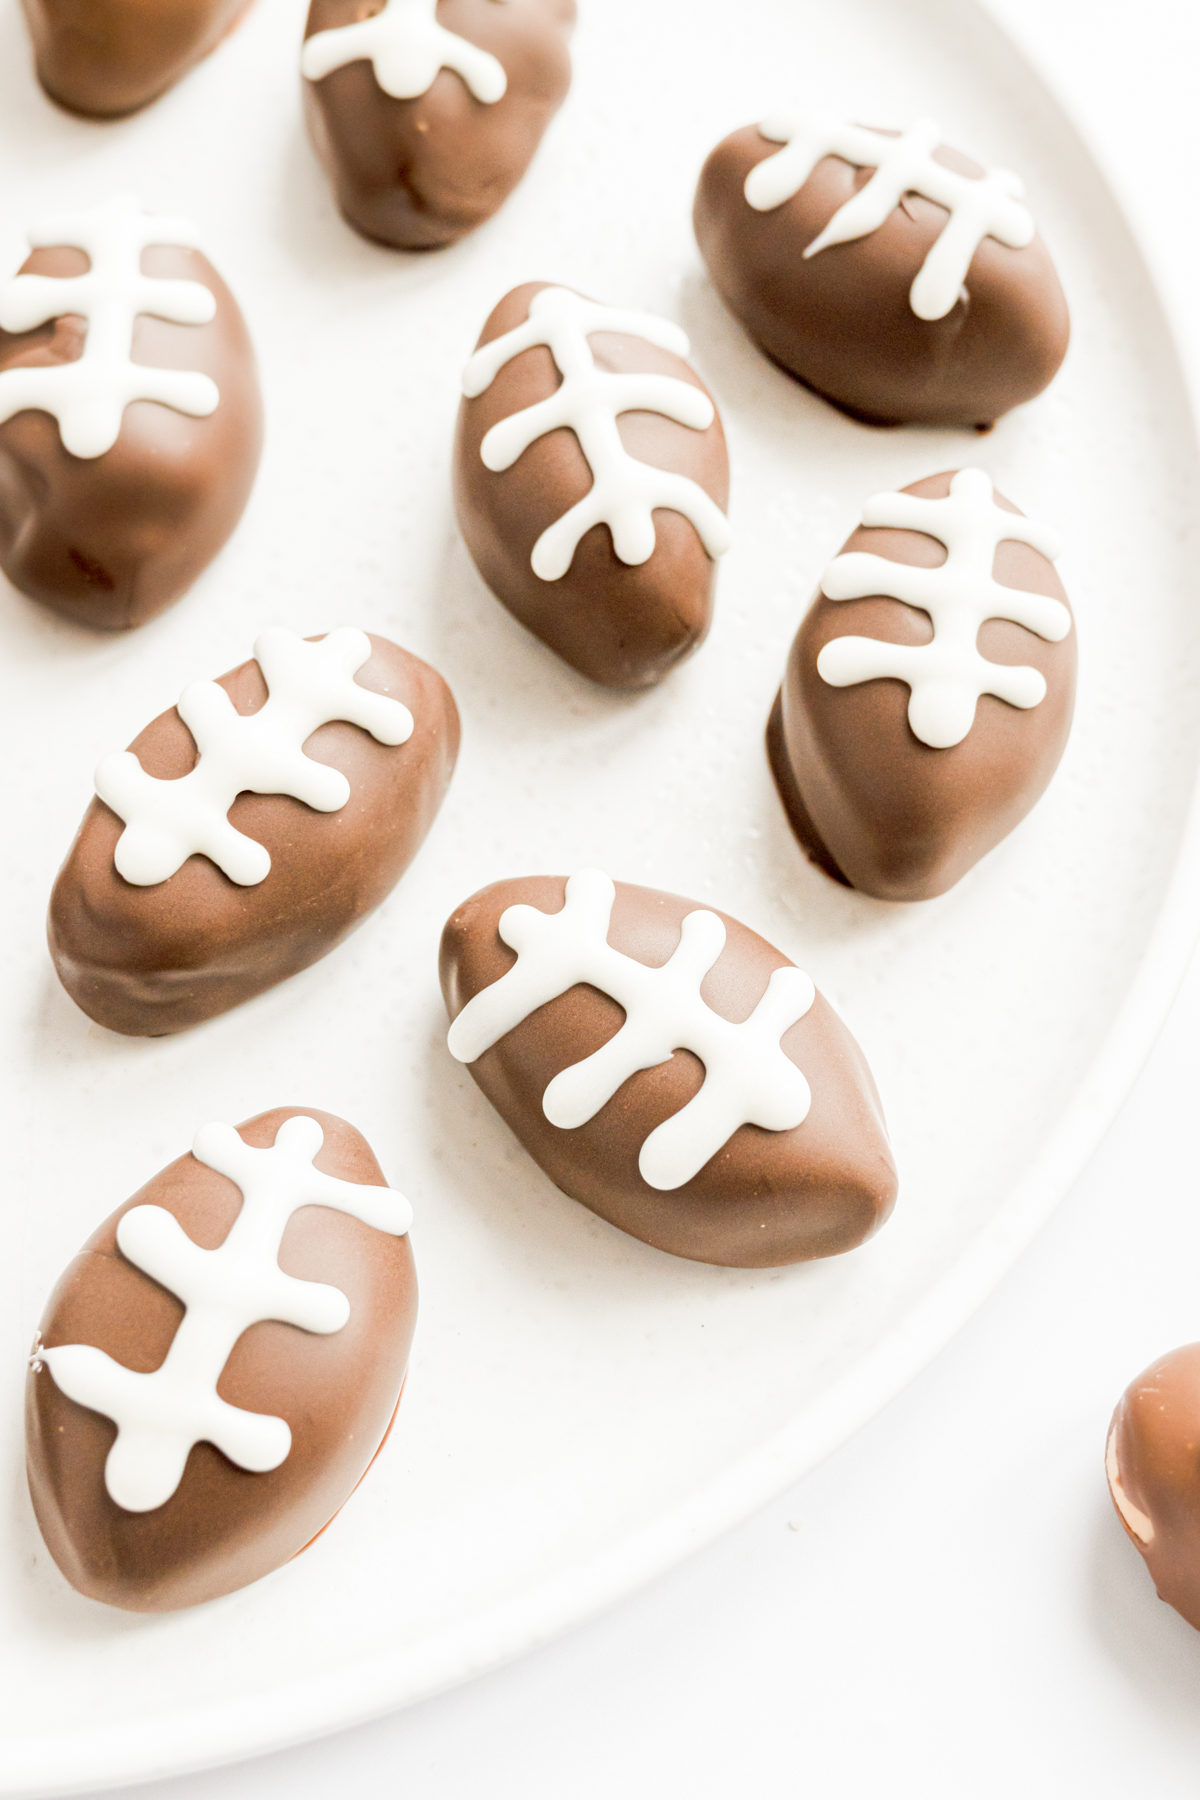 Peanut butter truffles shaped like footballs are elegantly arranged on a pristine white plate.